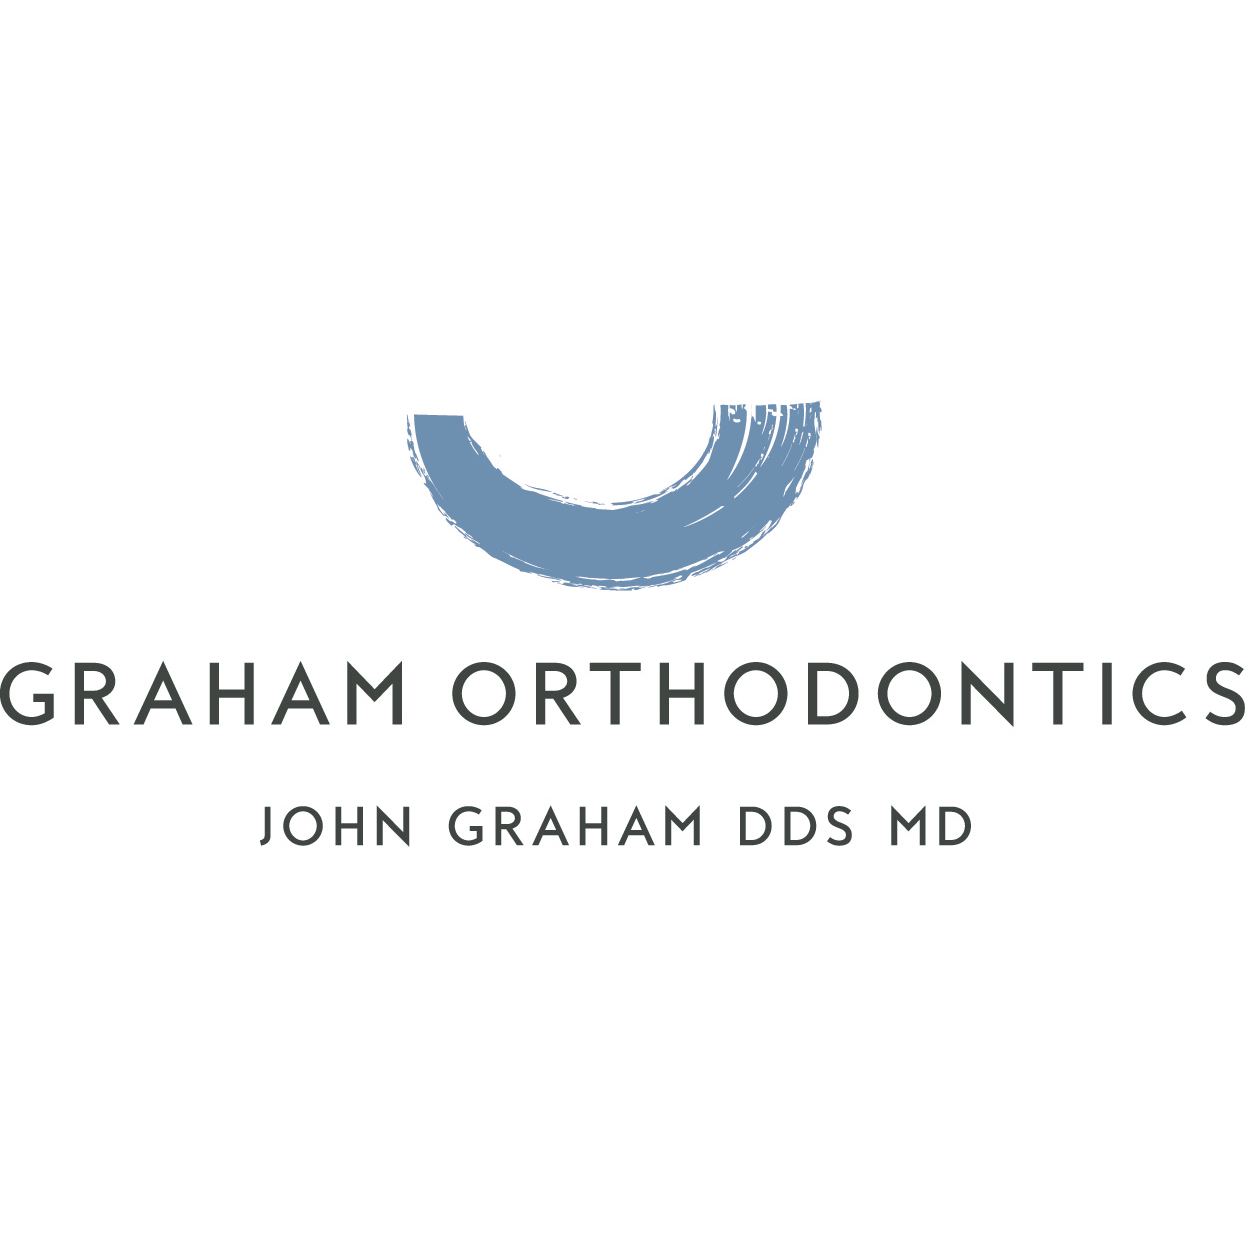 Graham Orthodontics